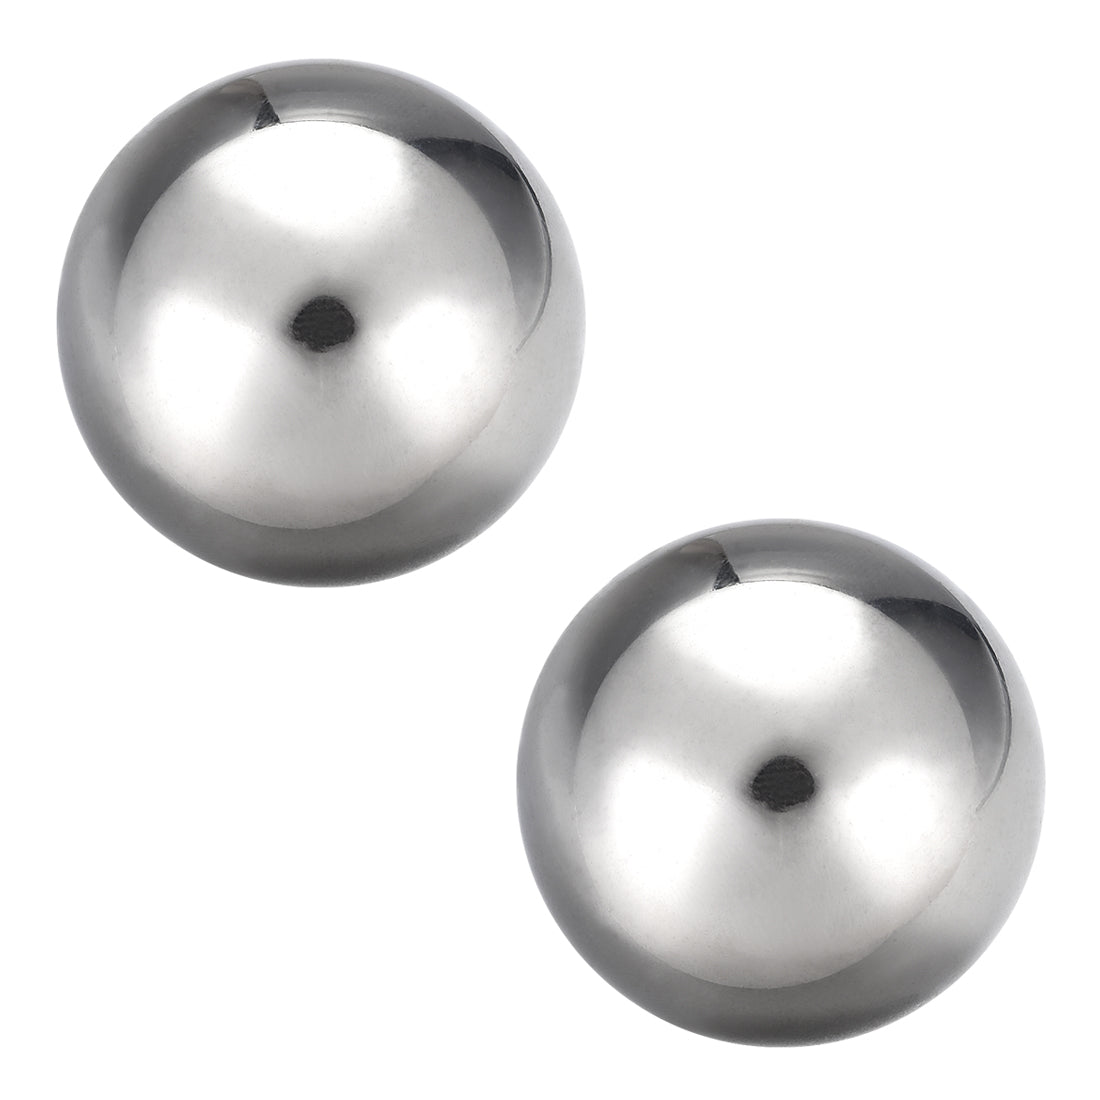 uxcell Uxcell Precision Chrome Steel Bearing Balls 40mm G10 2pcs